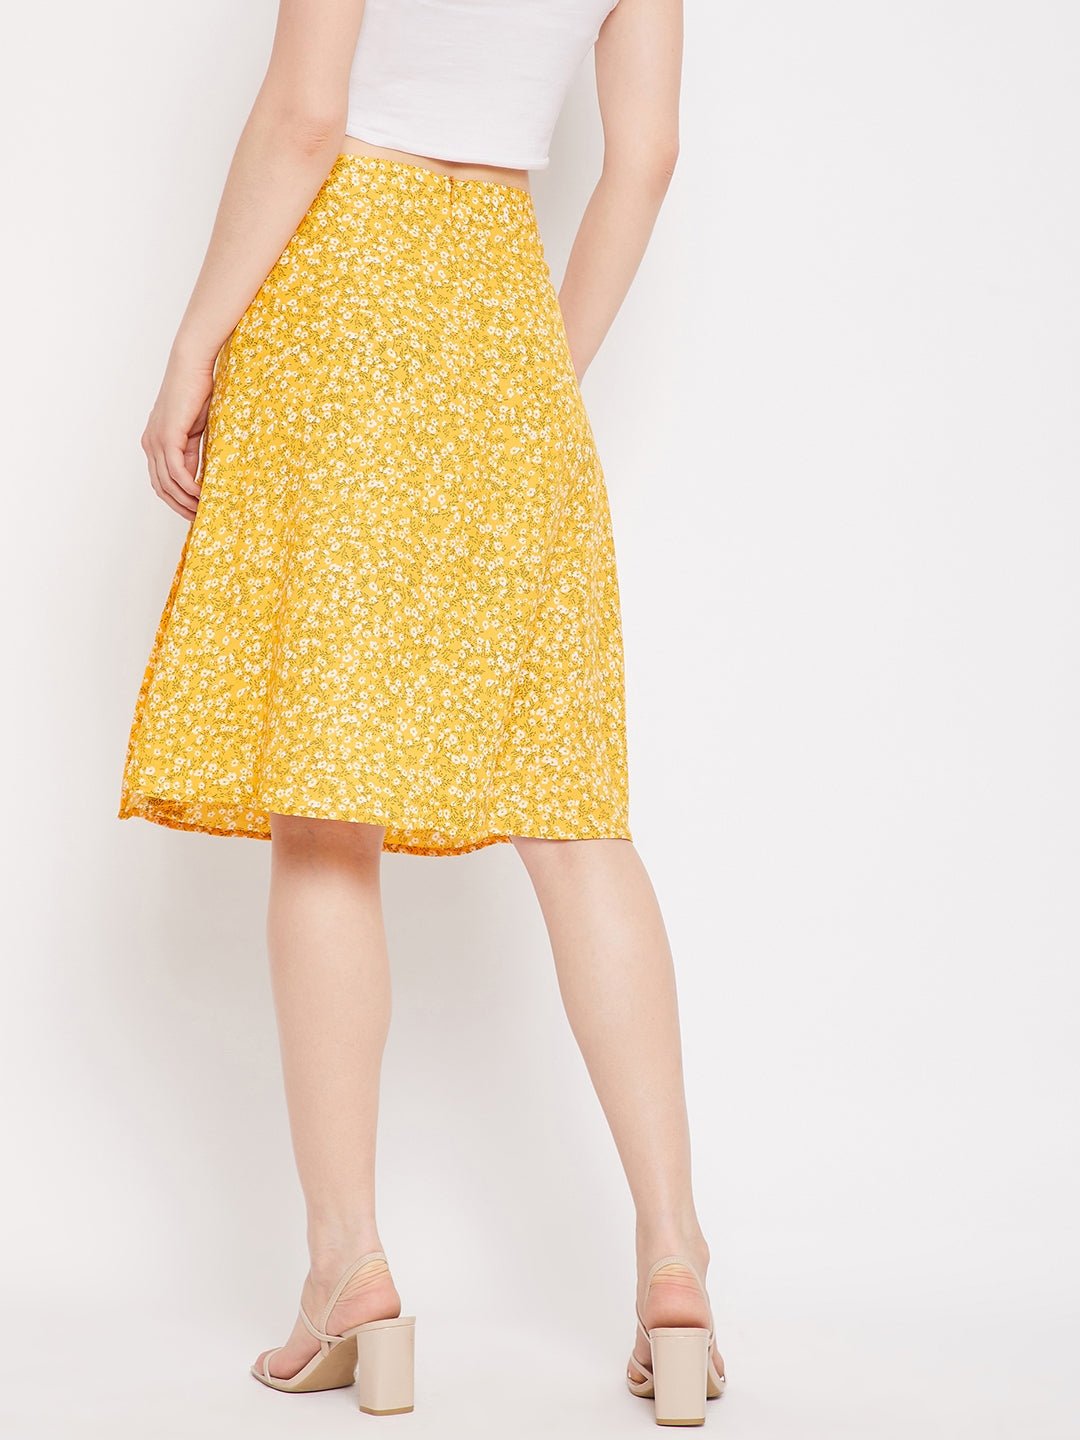 Folk Republic Women Yellow & White Floral Printed Thigh-High Slit Pencil Midi Skirt - #folk republic#